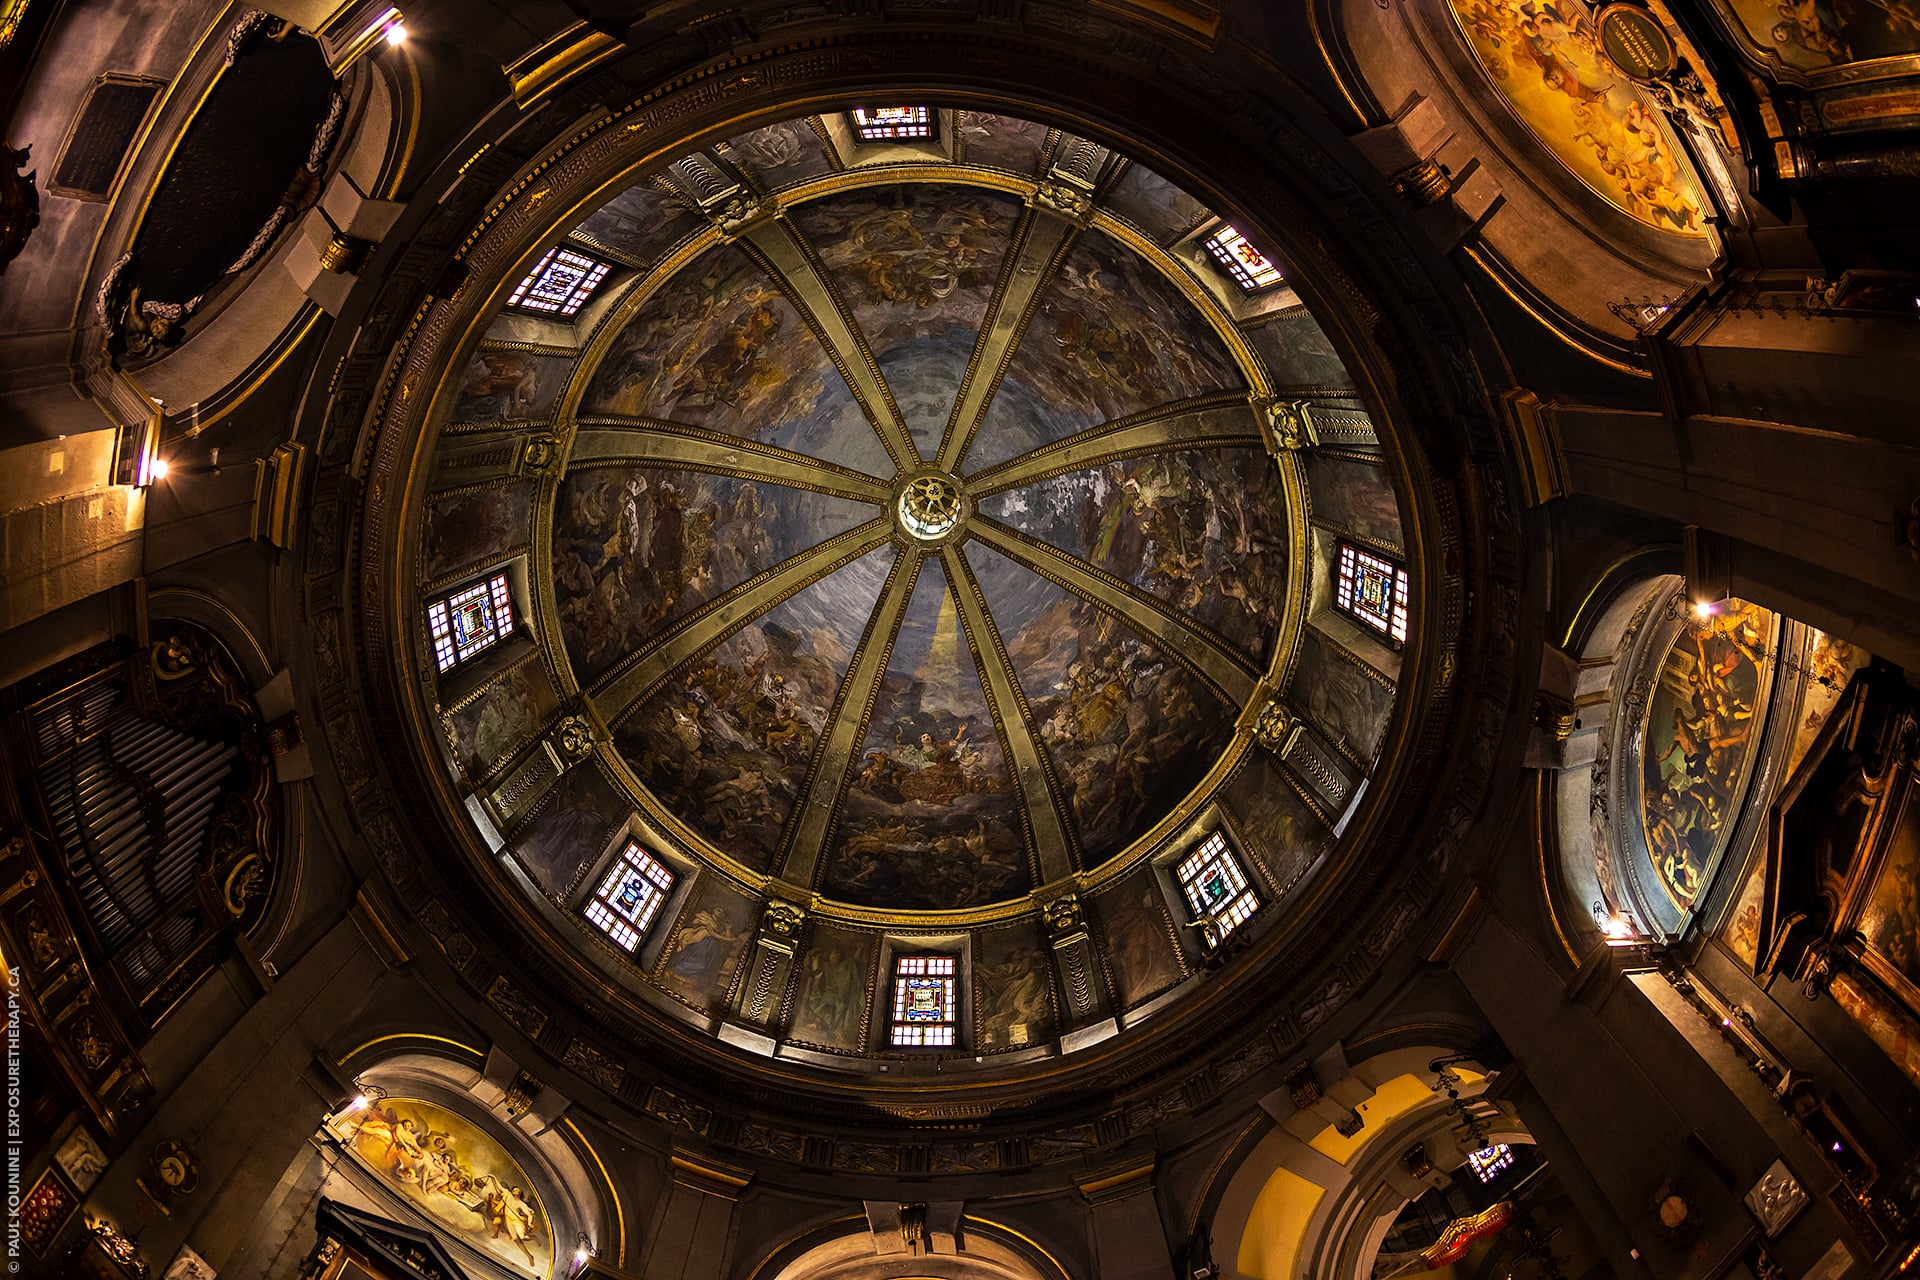 15 mm fisheye lens on full-frame camera, Civico Tempio di San Sebastiano ceiling, Milan.